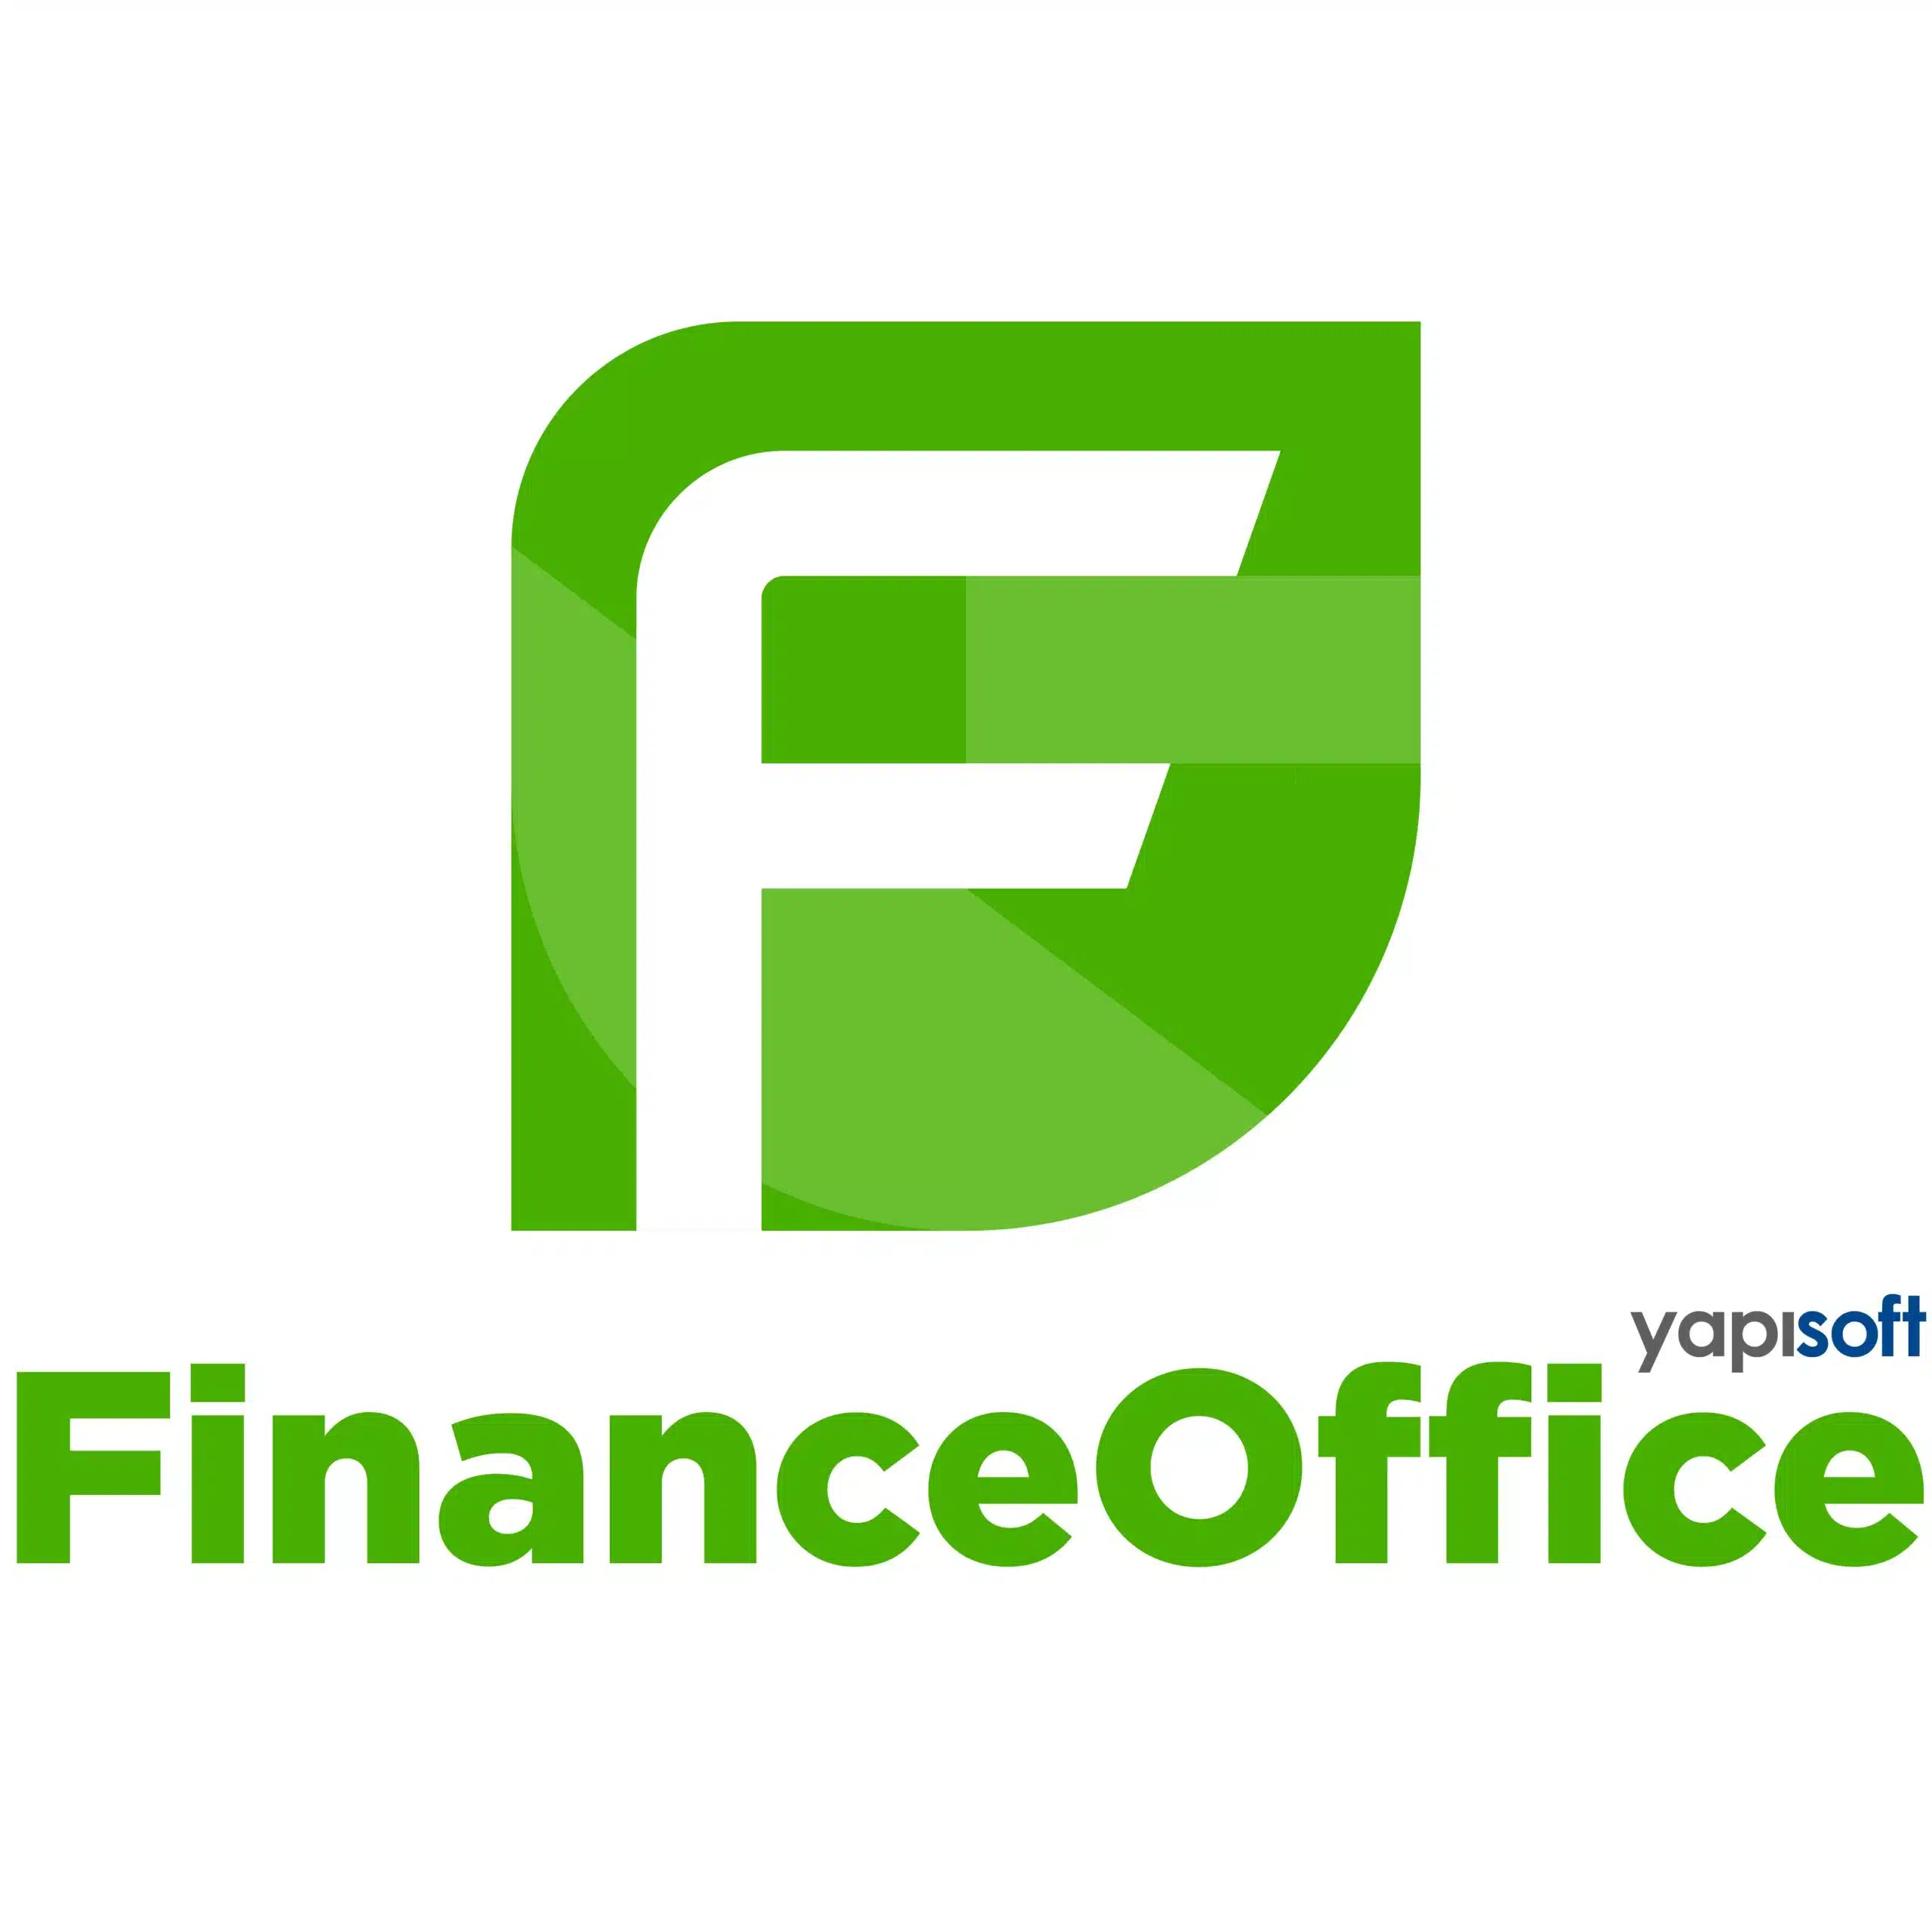 financeoffice logo jpeg scaled